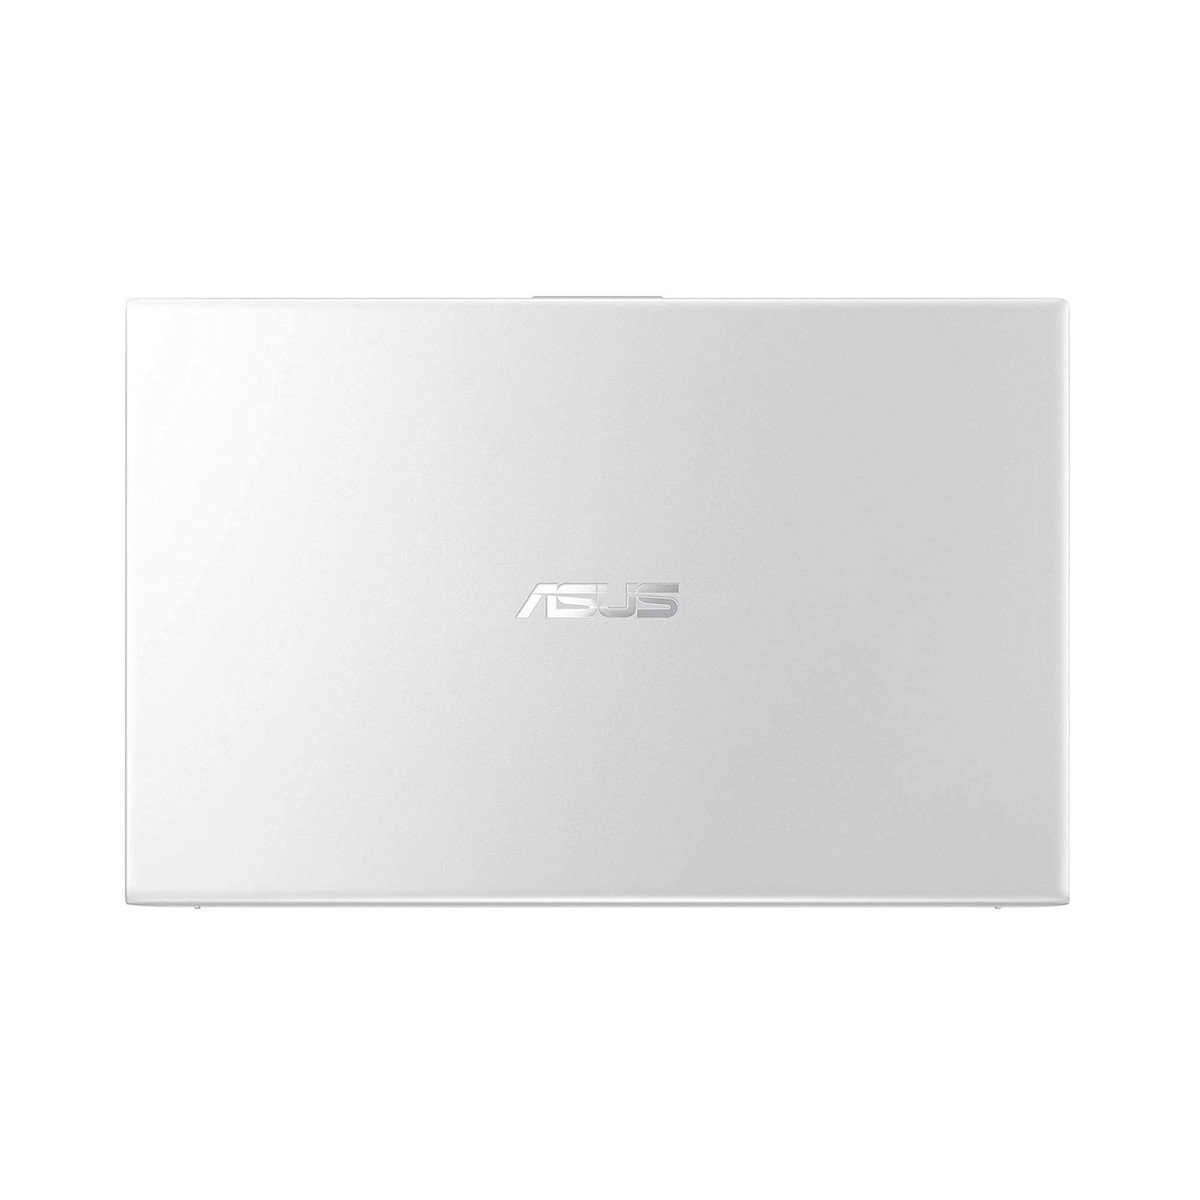 Asus VivoBook S431FL-AM007T  Laptop ,Intel i7-8565U, 16GB RAM,512GB SSD, Nvidia Geforce MX250,14 inches, Windows 10,Silver